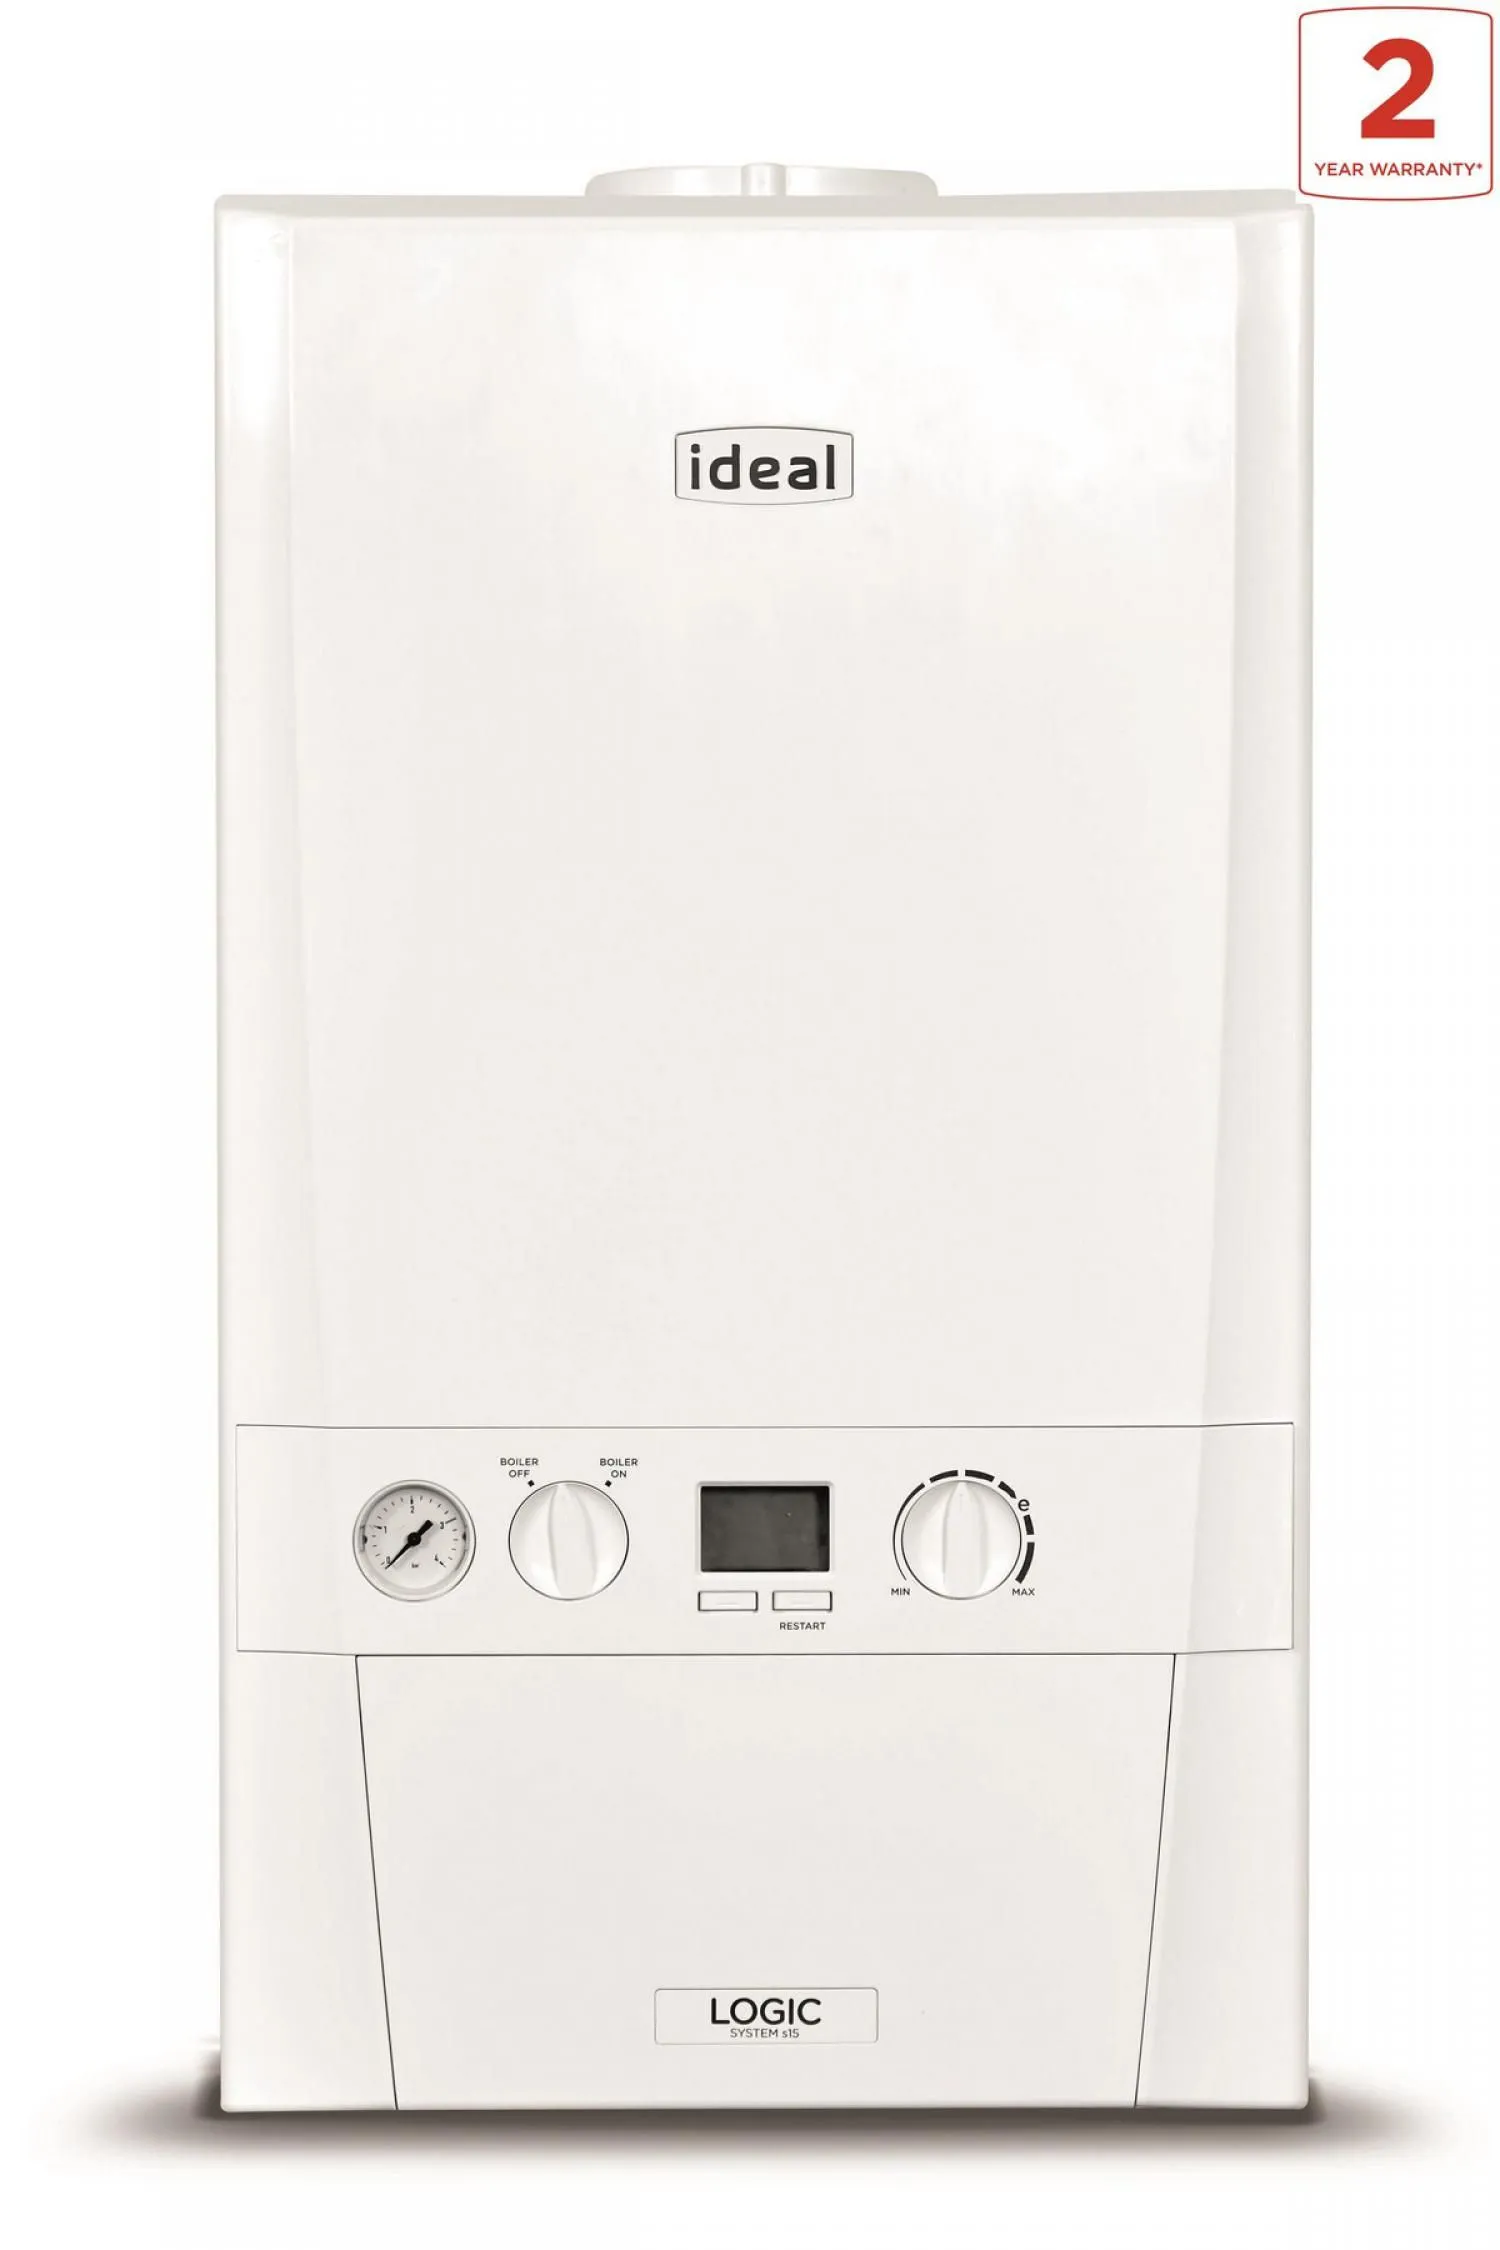 Ideal Logic 15 System Boiler